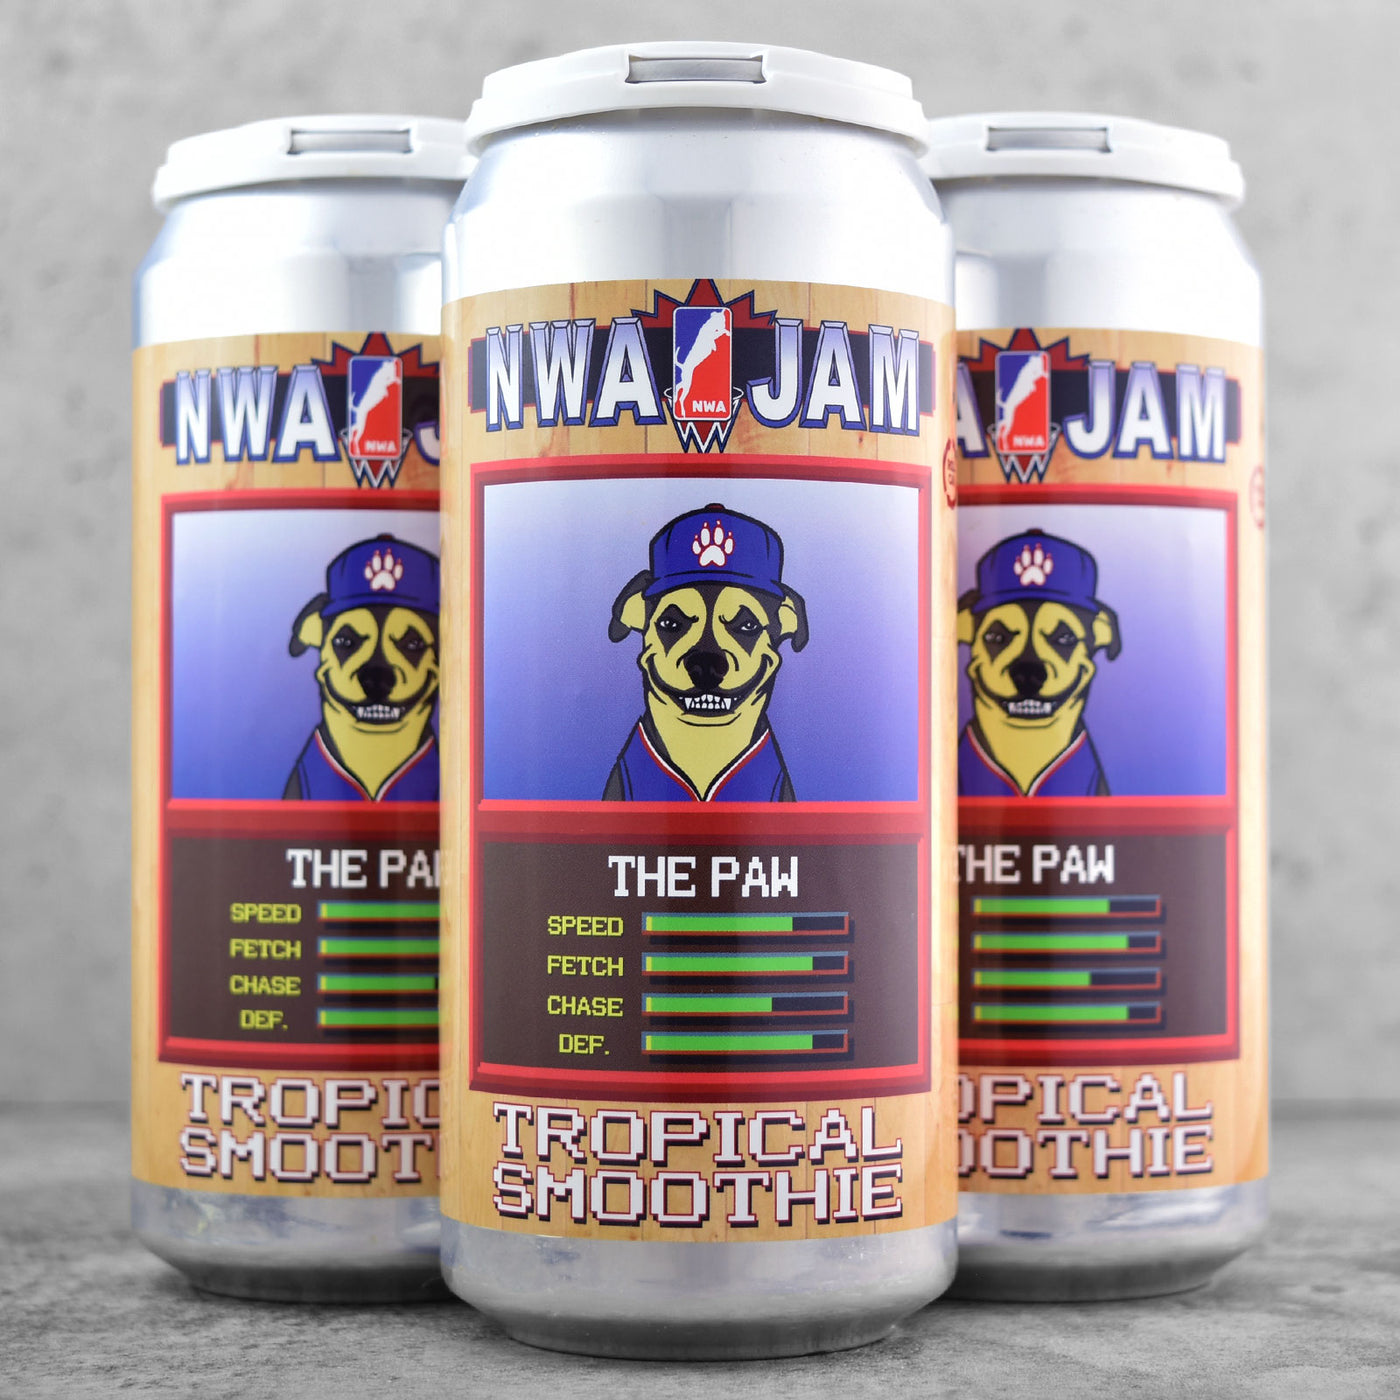 New World Ales / Sandbox - NWA JAM - The Paw